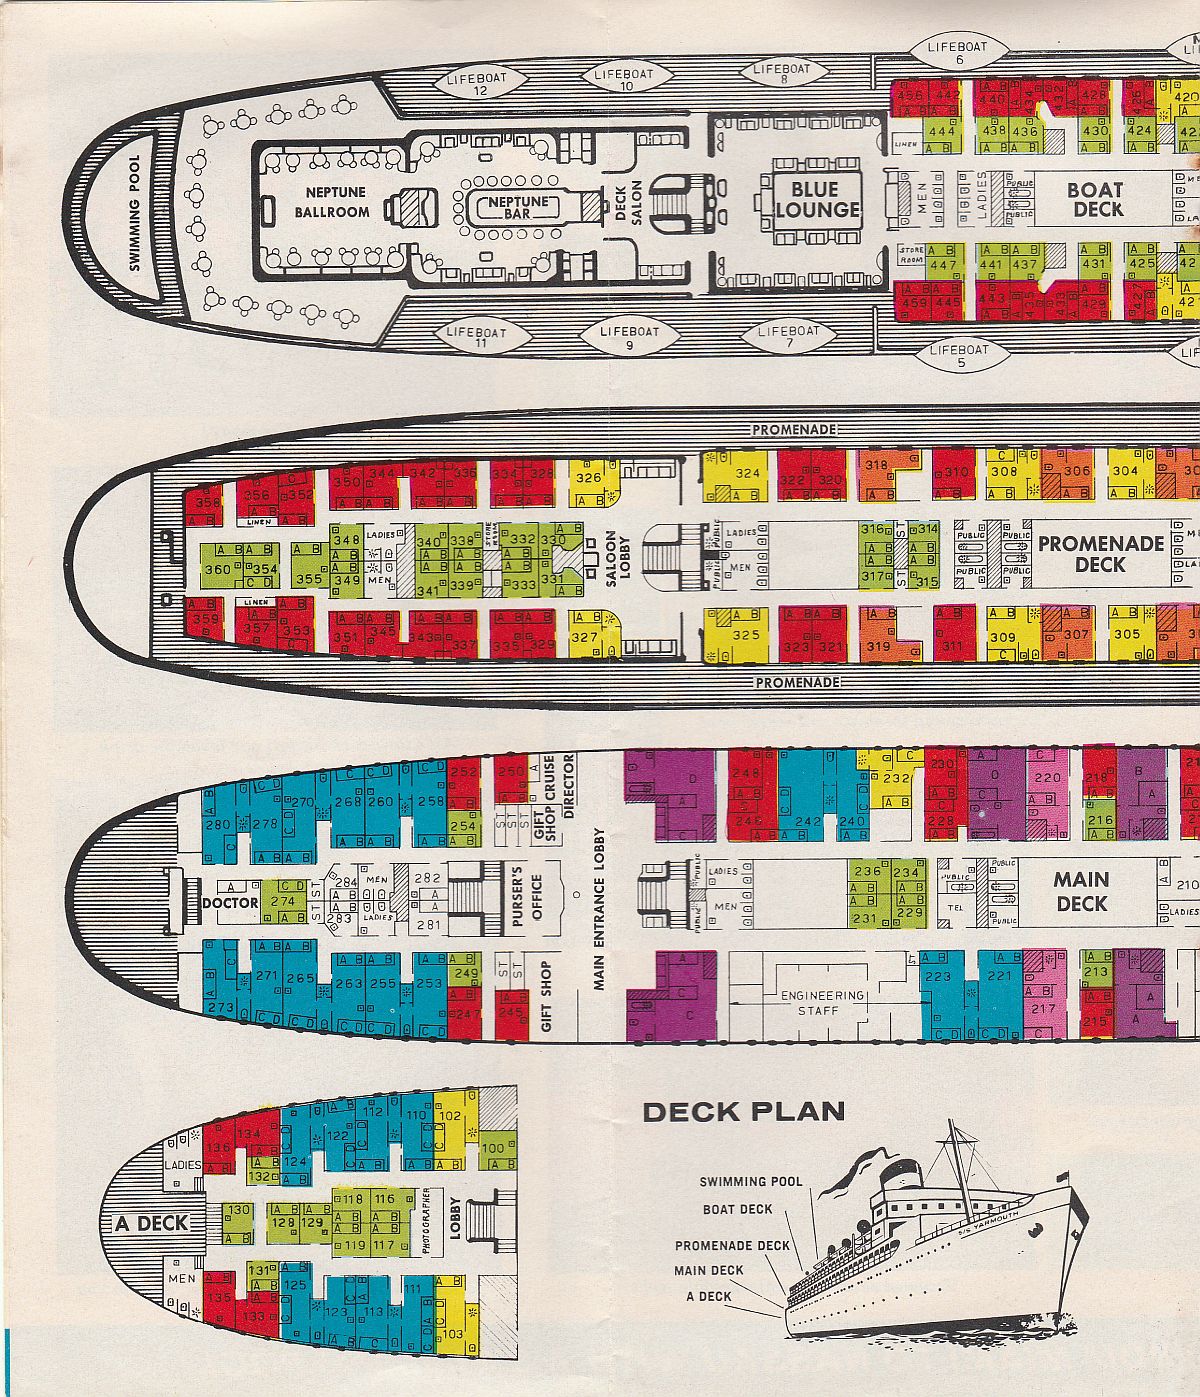 ss Yarmouth Deck plan: Boat, Promenade, Main and A Decks aft